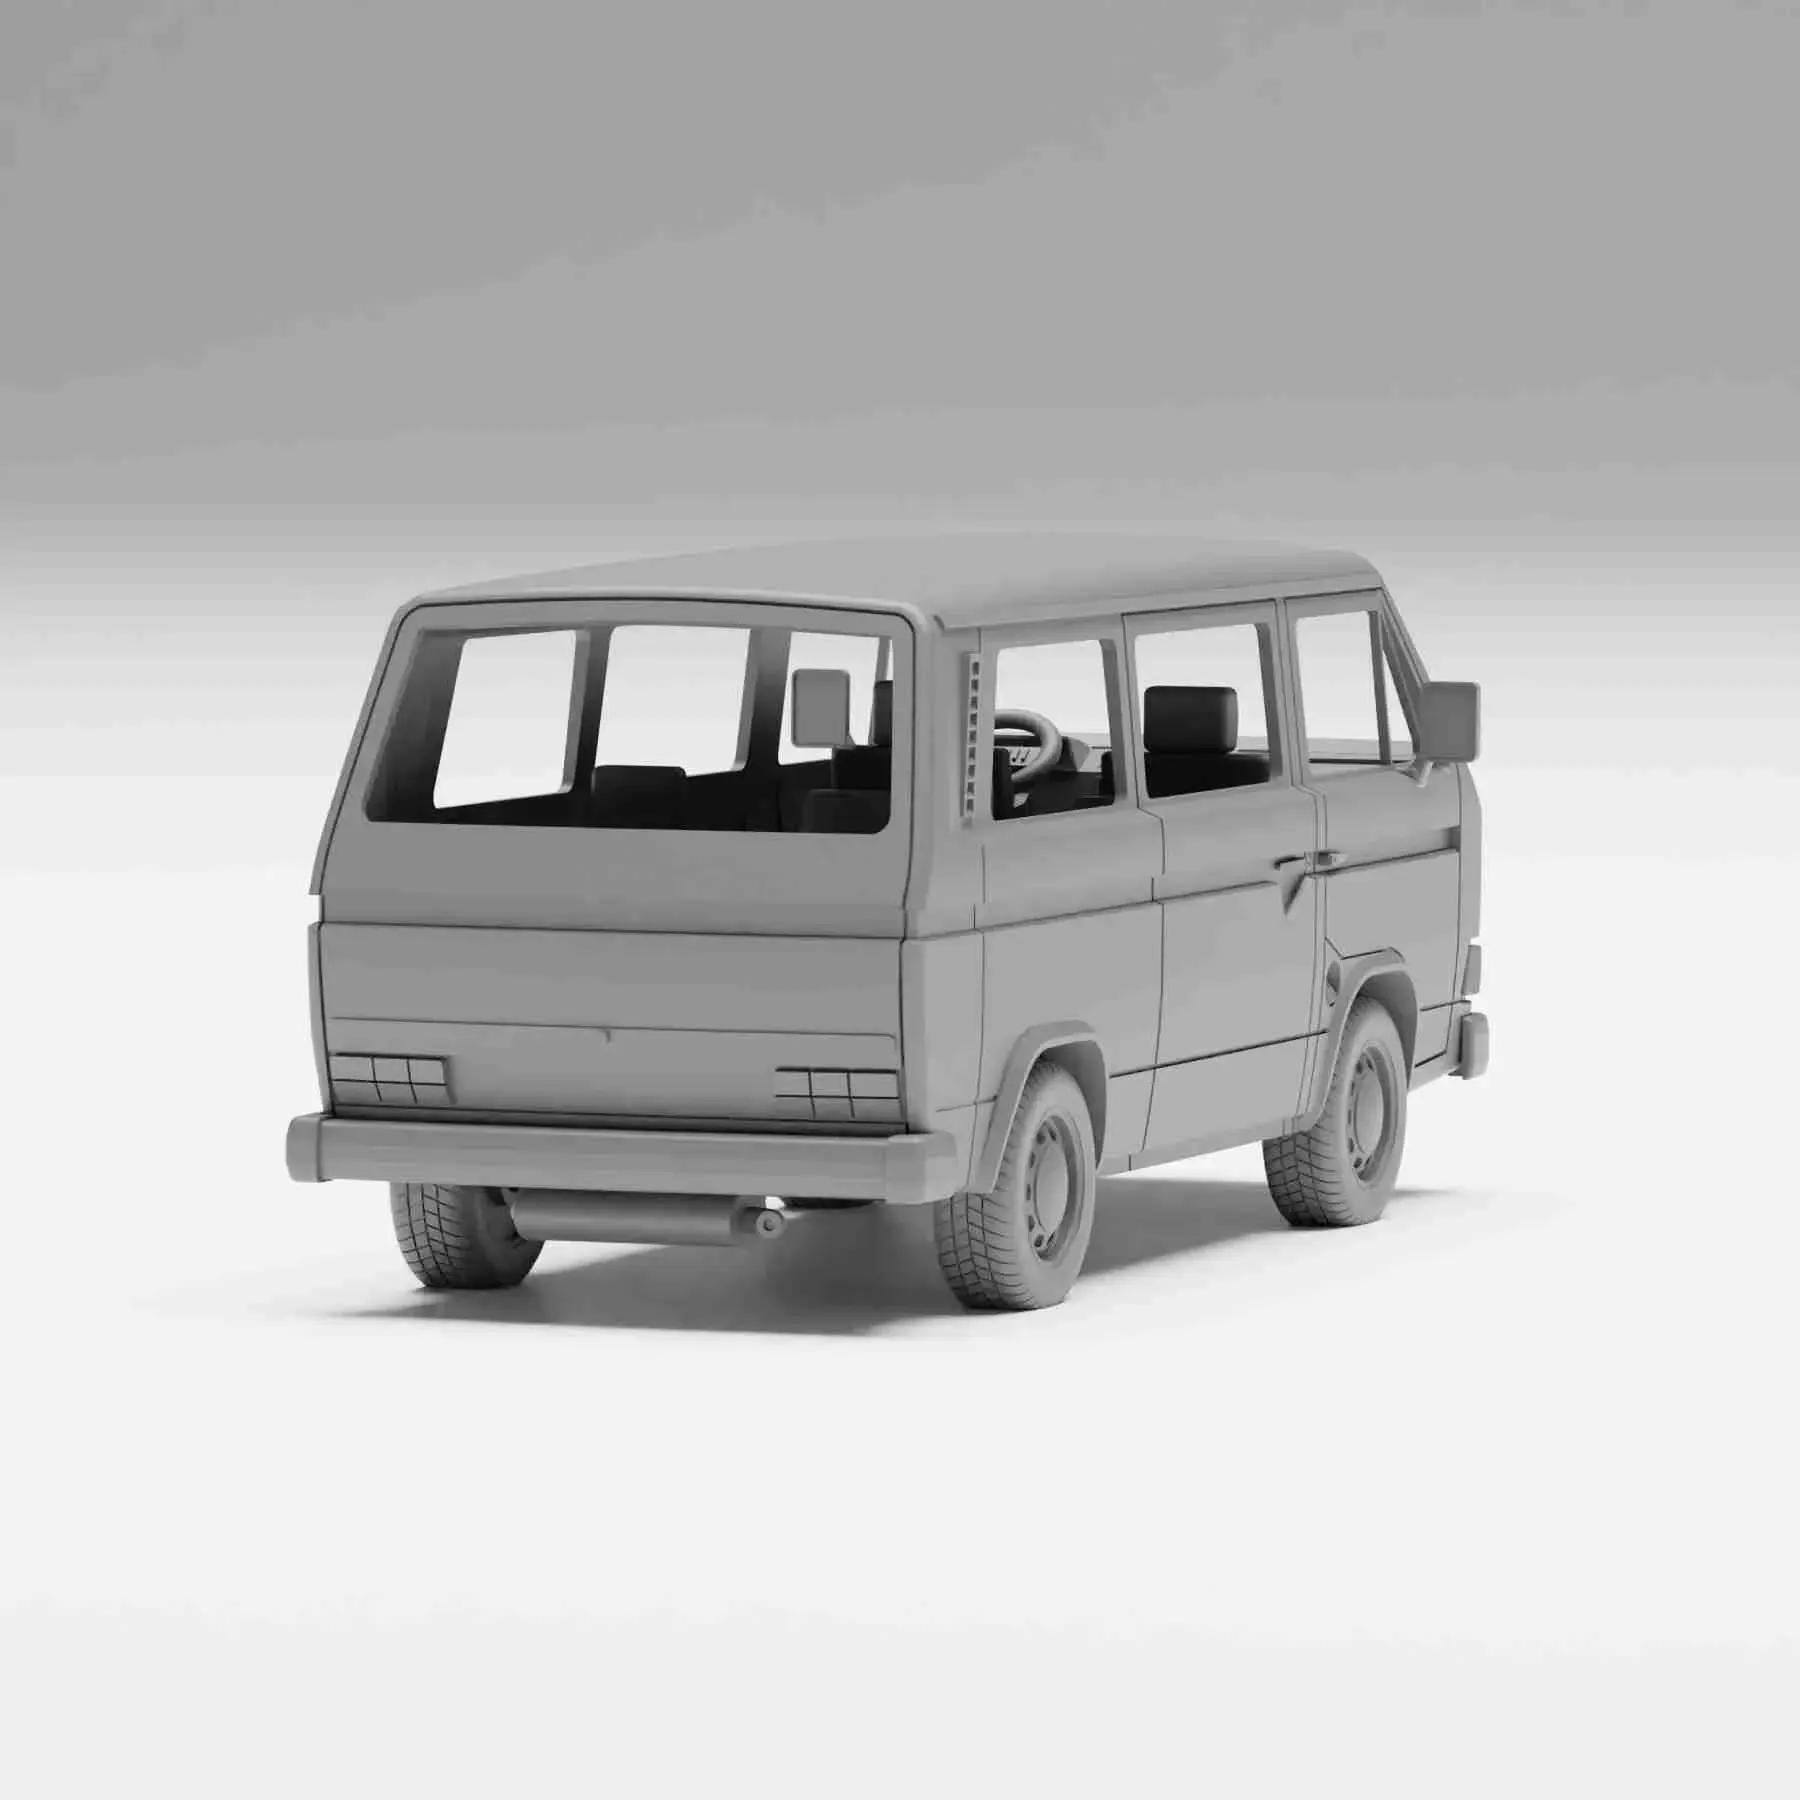 VW T3 - H0 scale van model kit